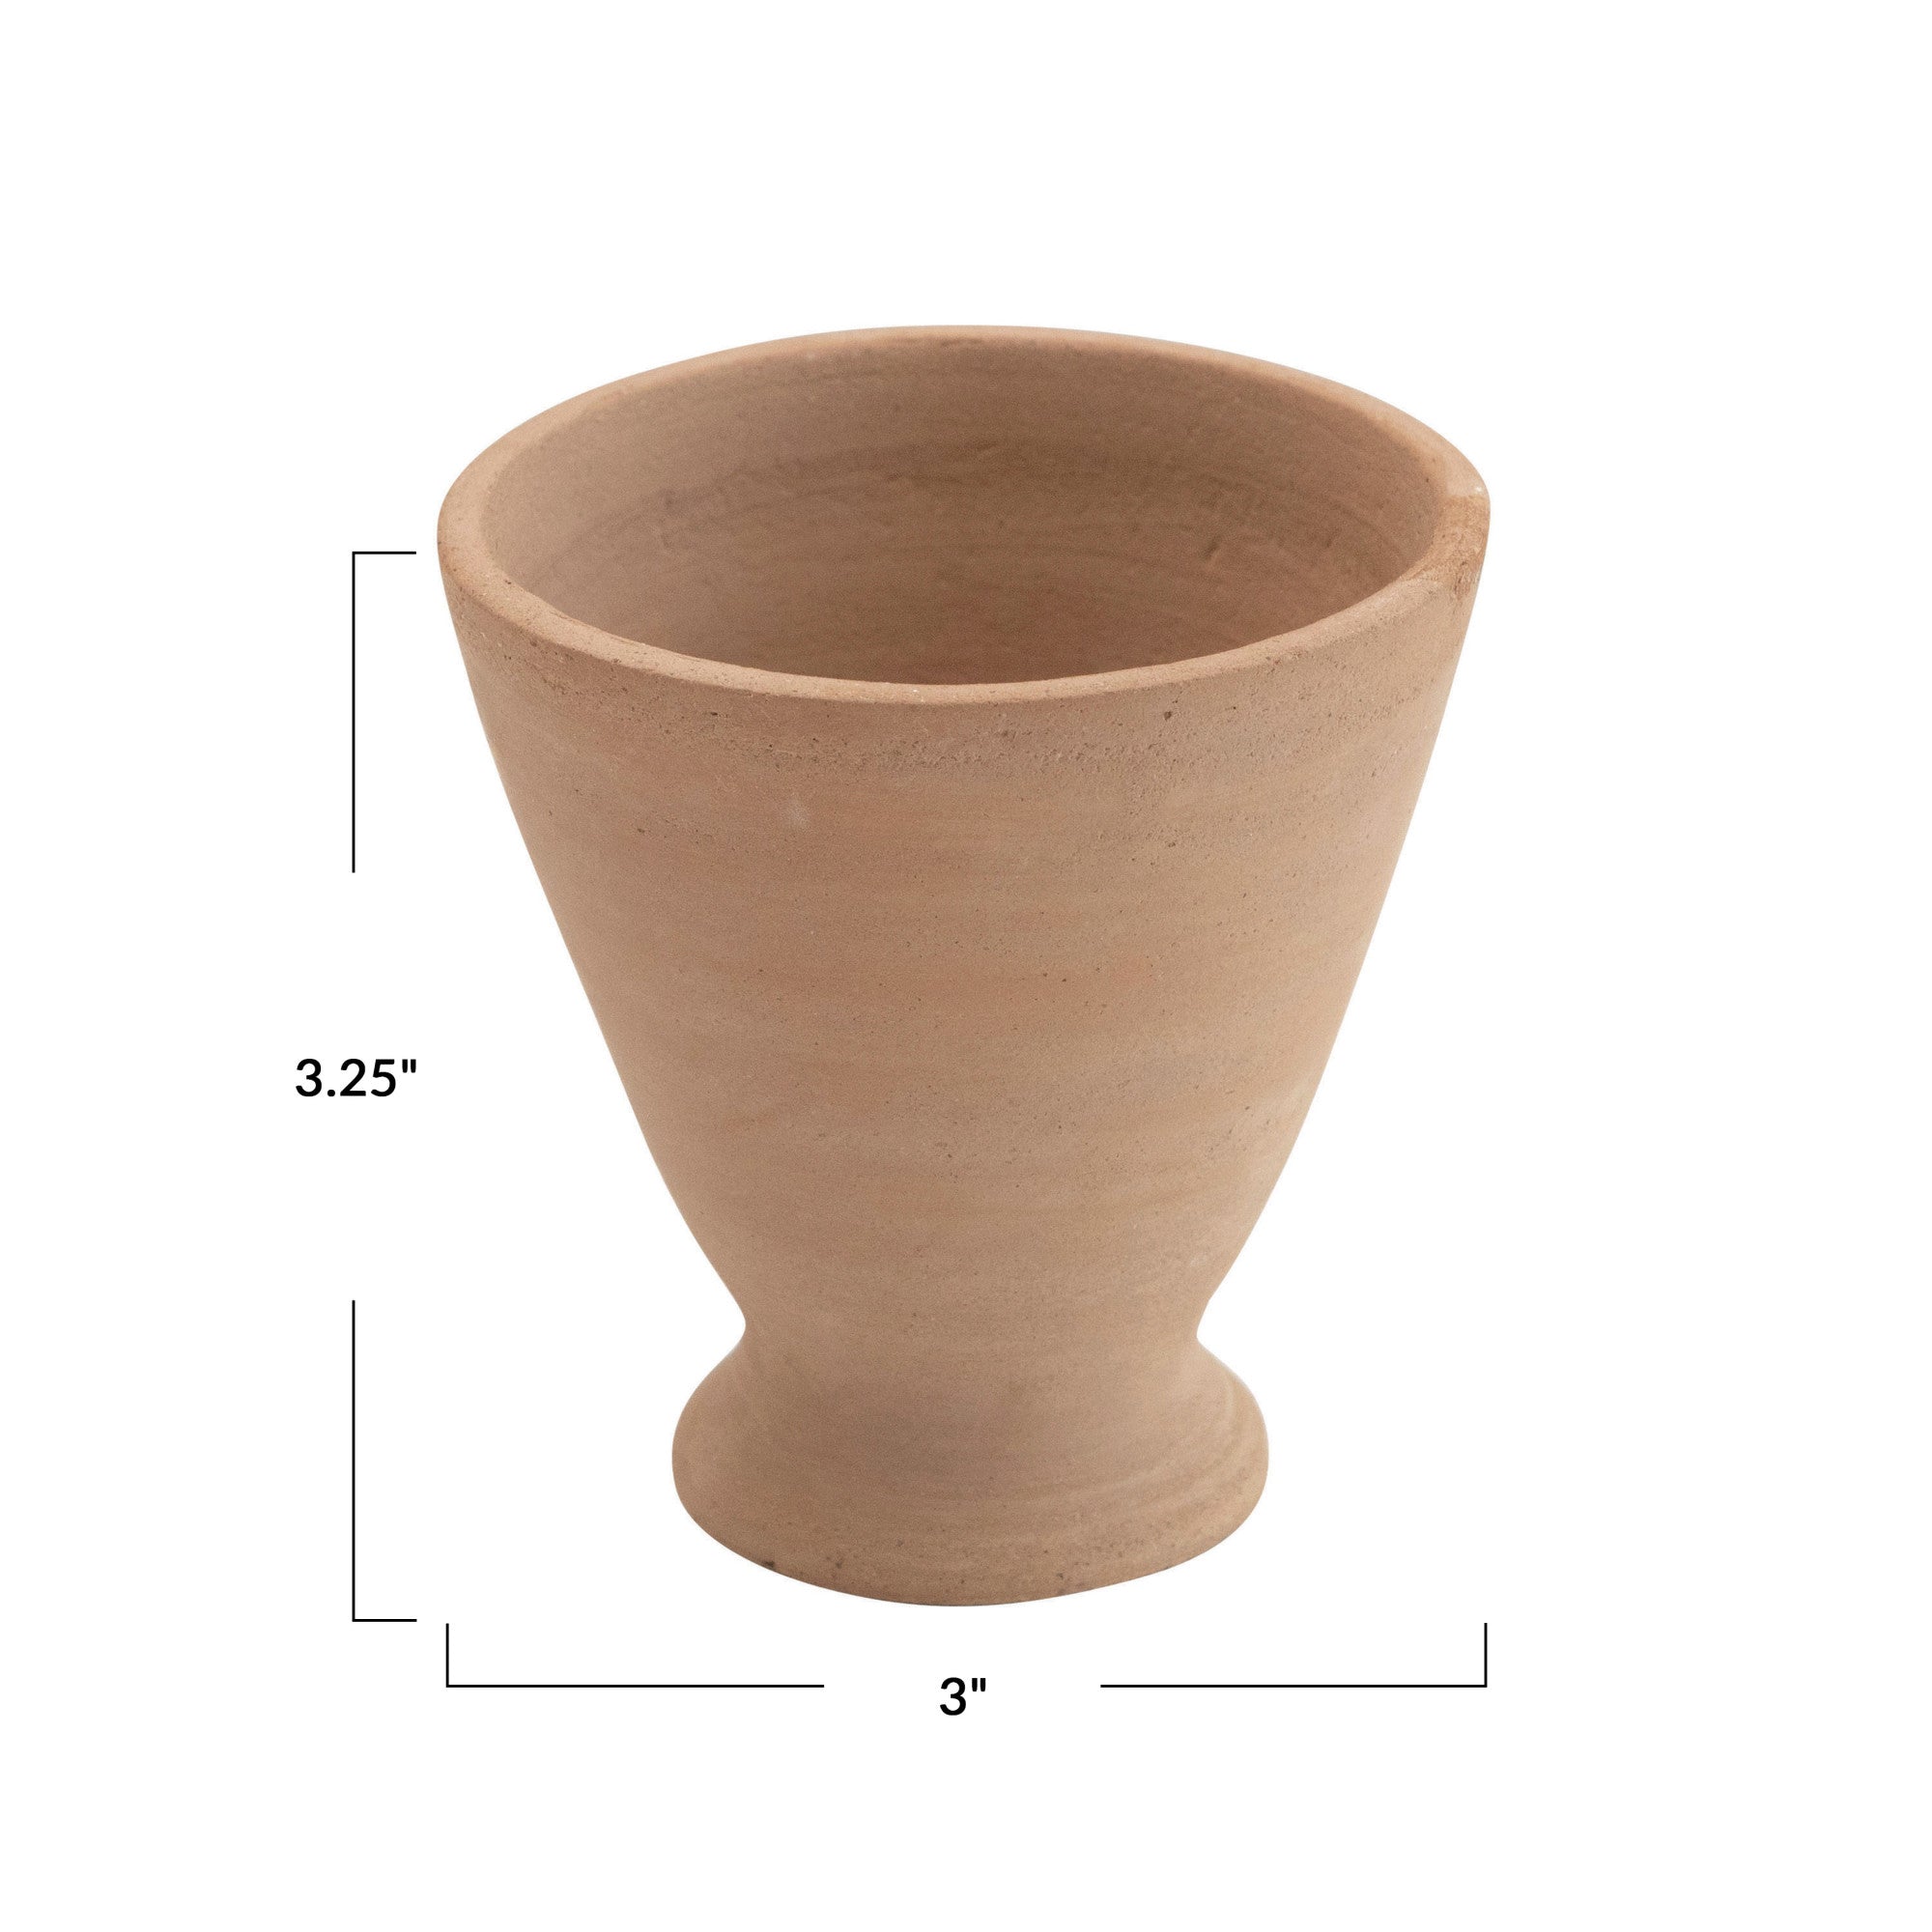 The Natural Petite Terracotta Pot